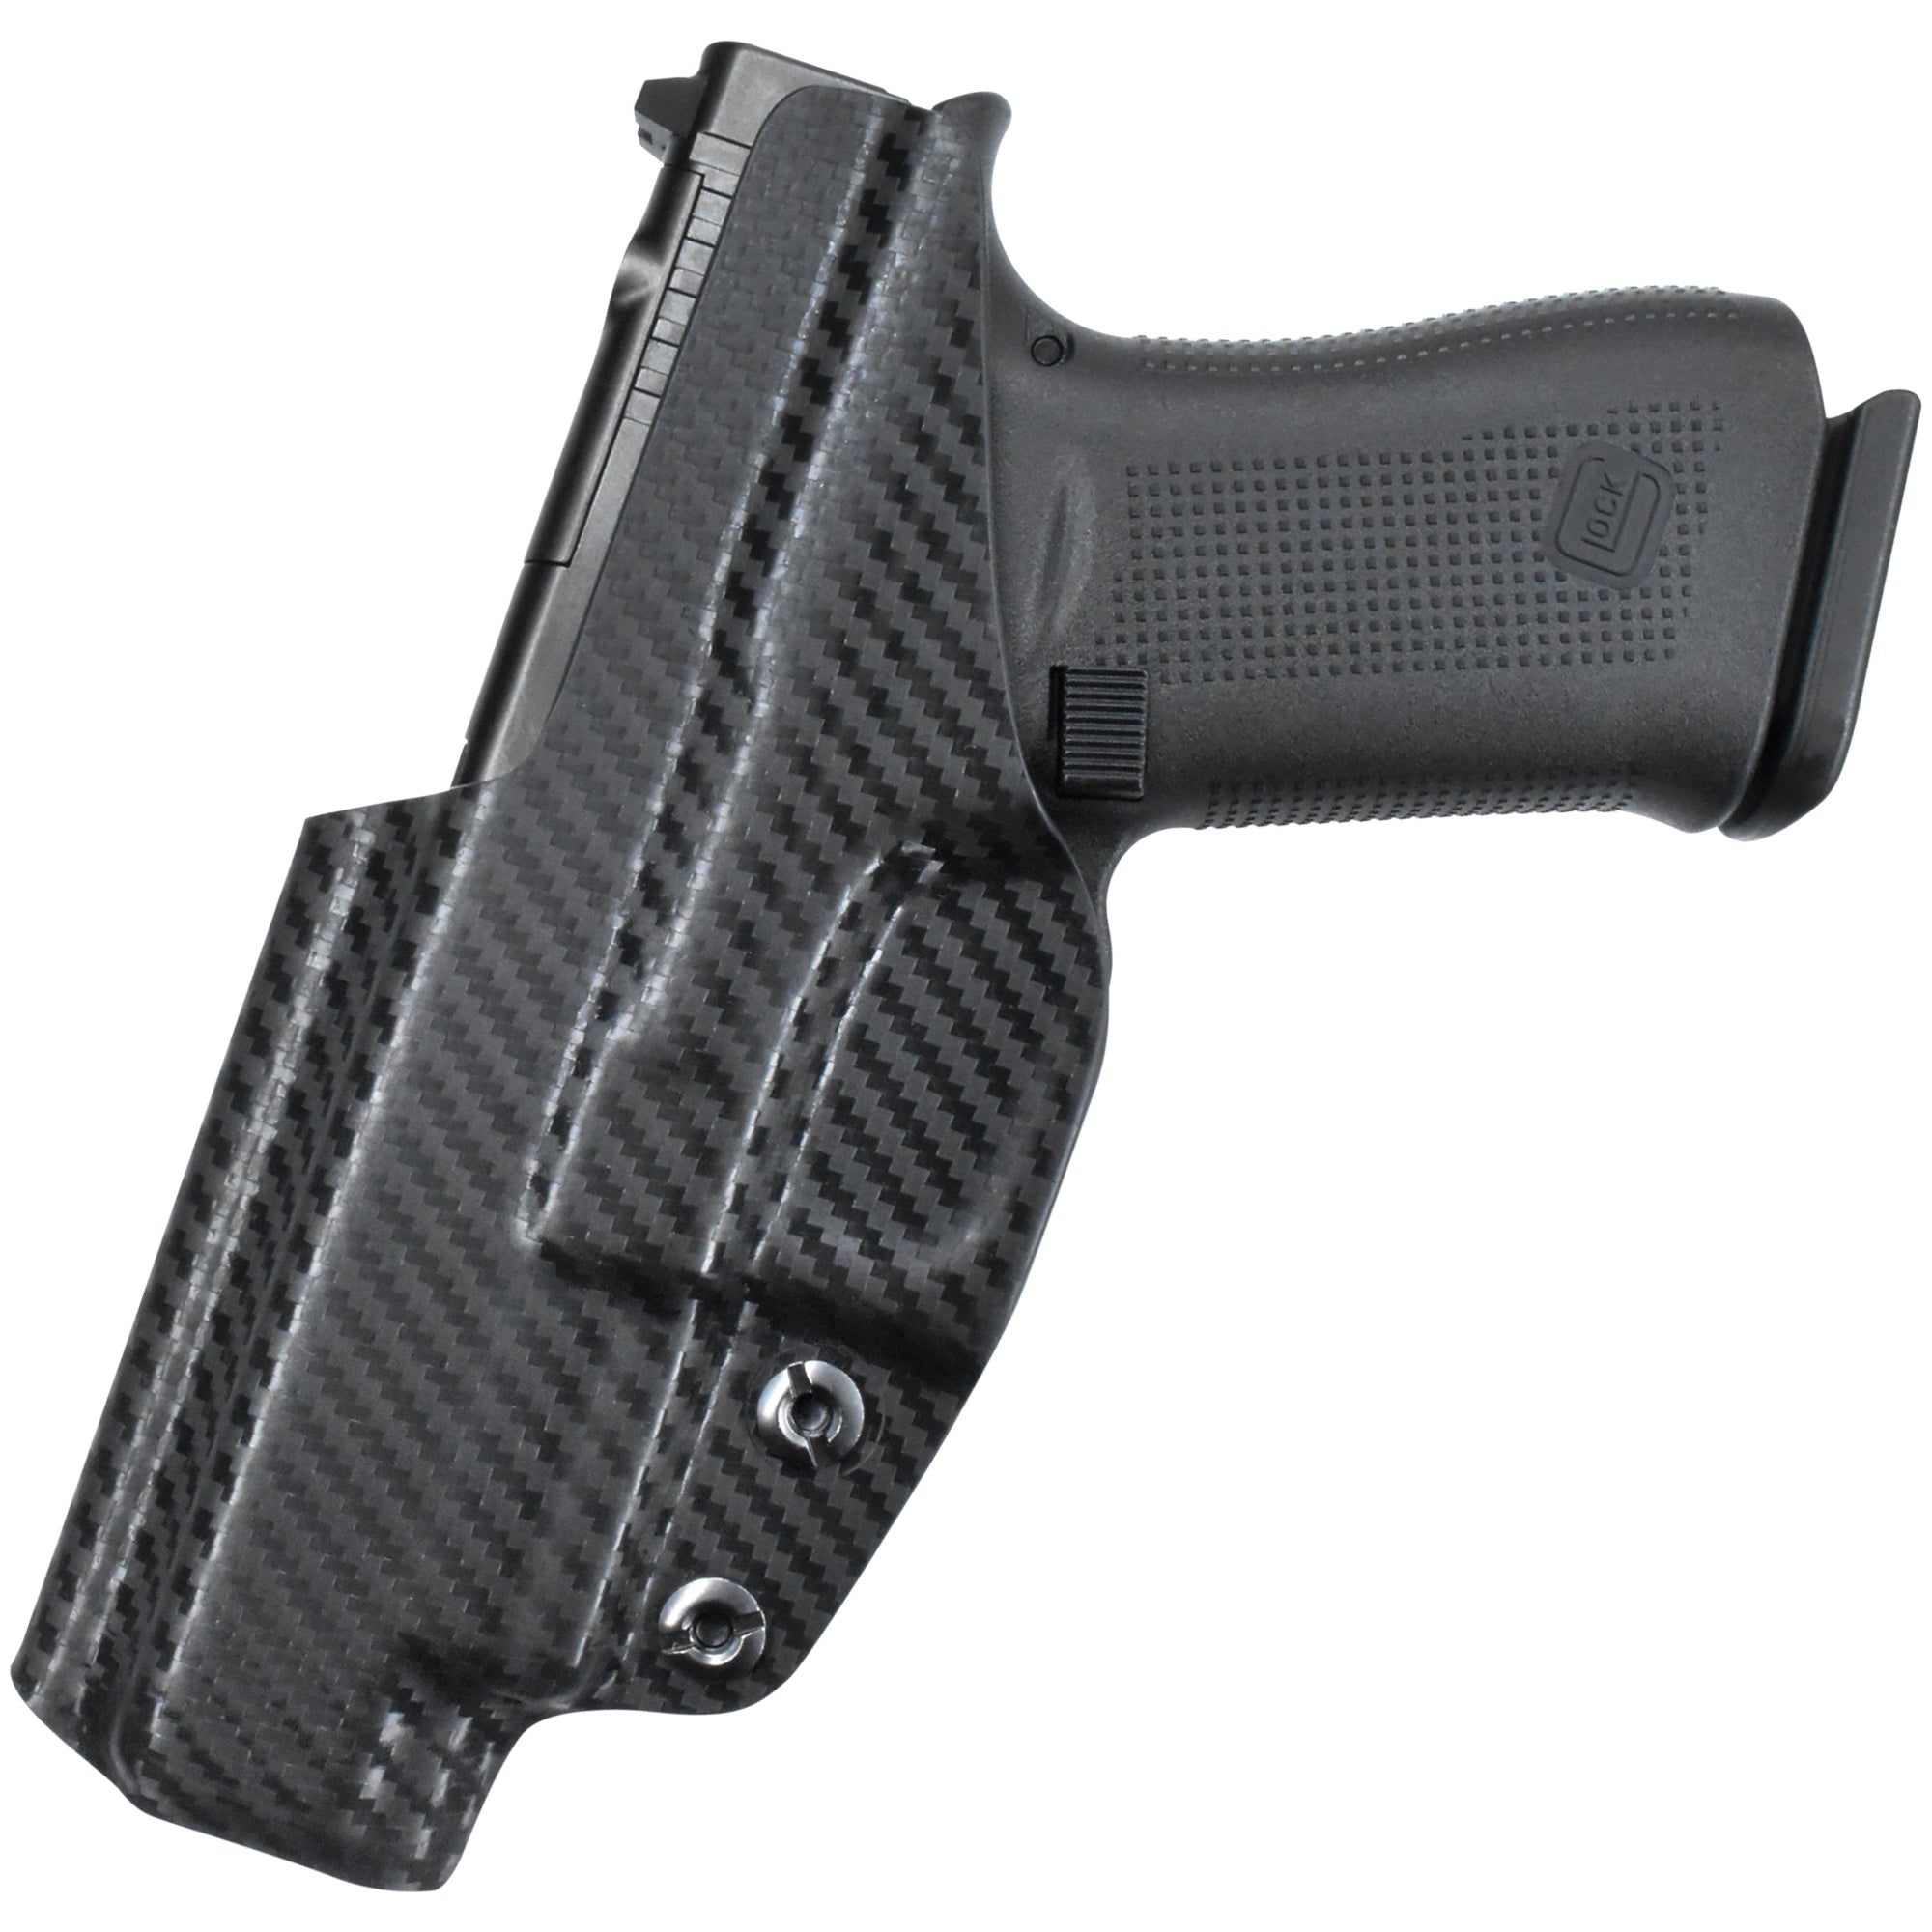 Glock 48 MOS IWB Sweat Guard Holster in Carbon Fiber - Rear